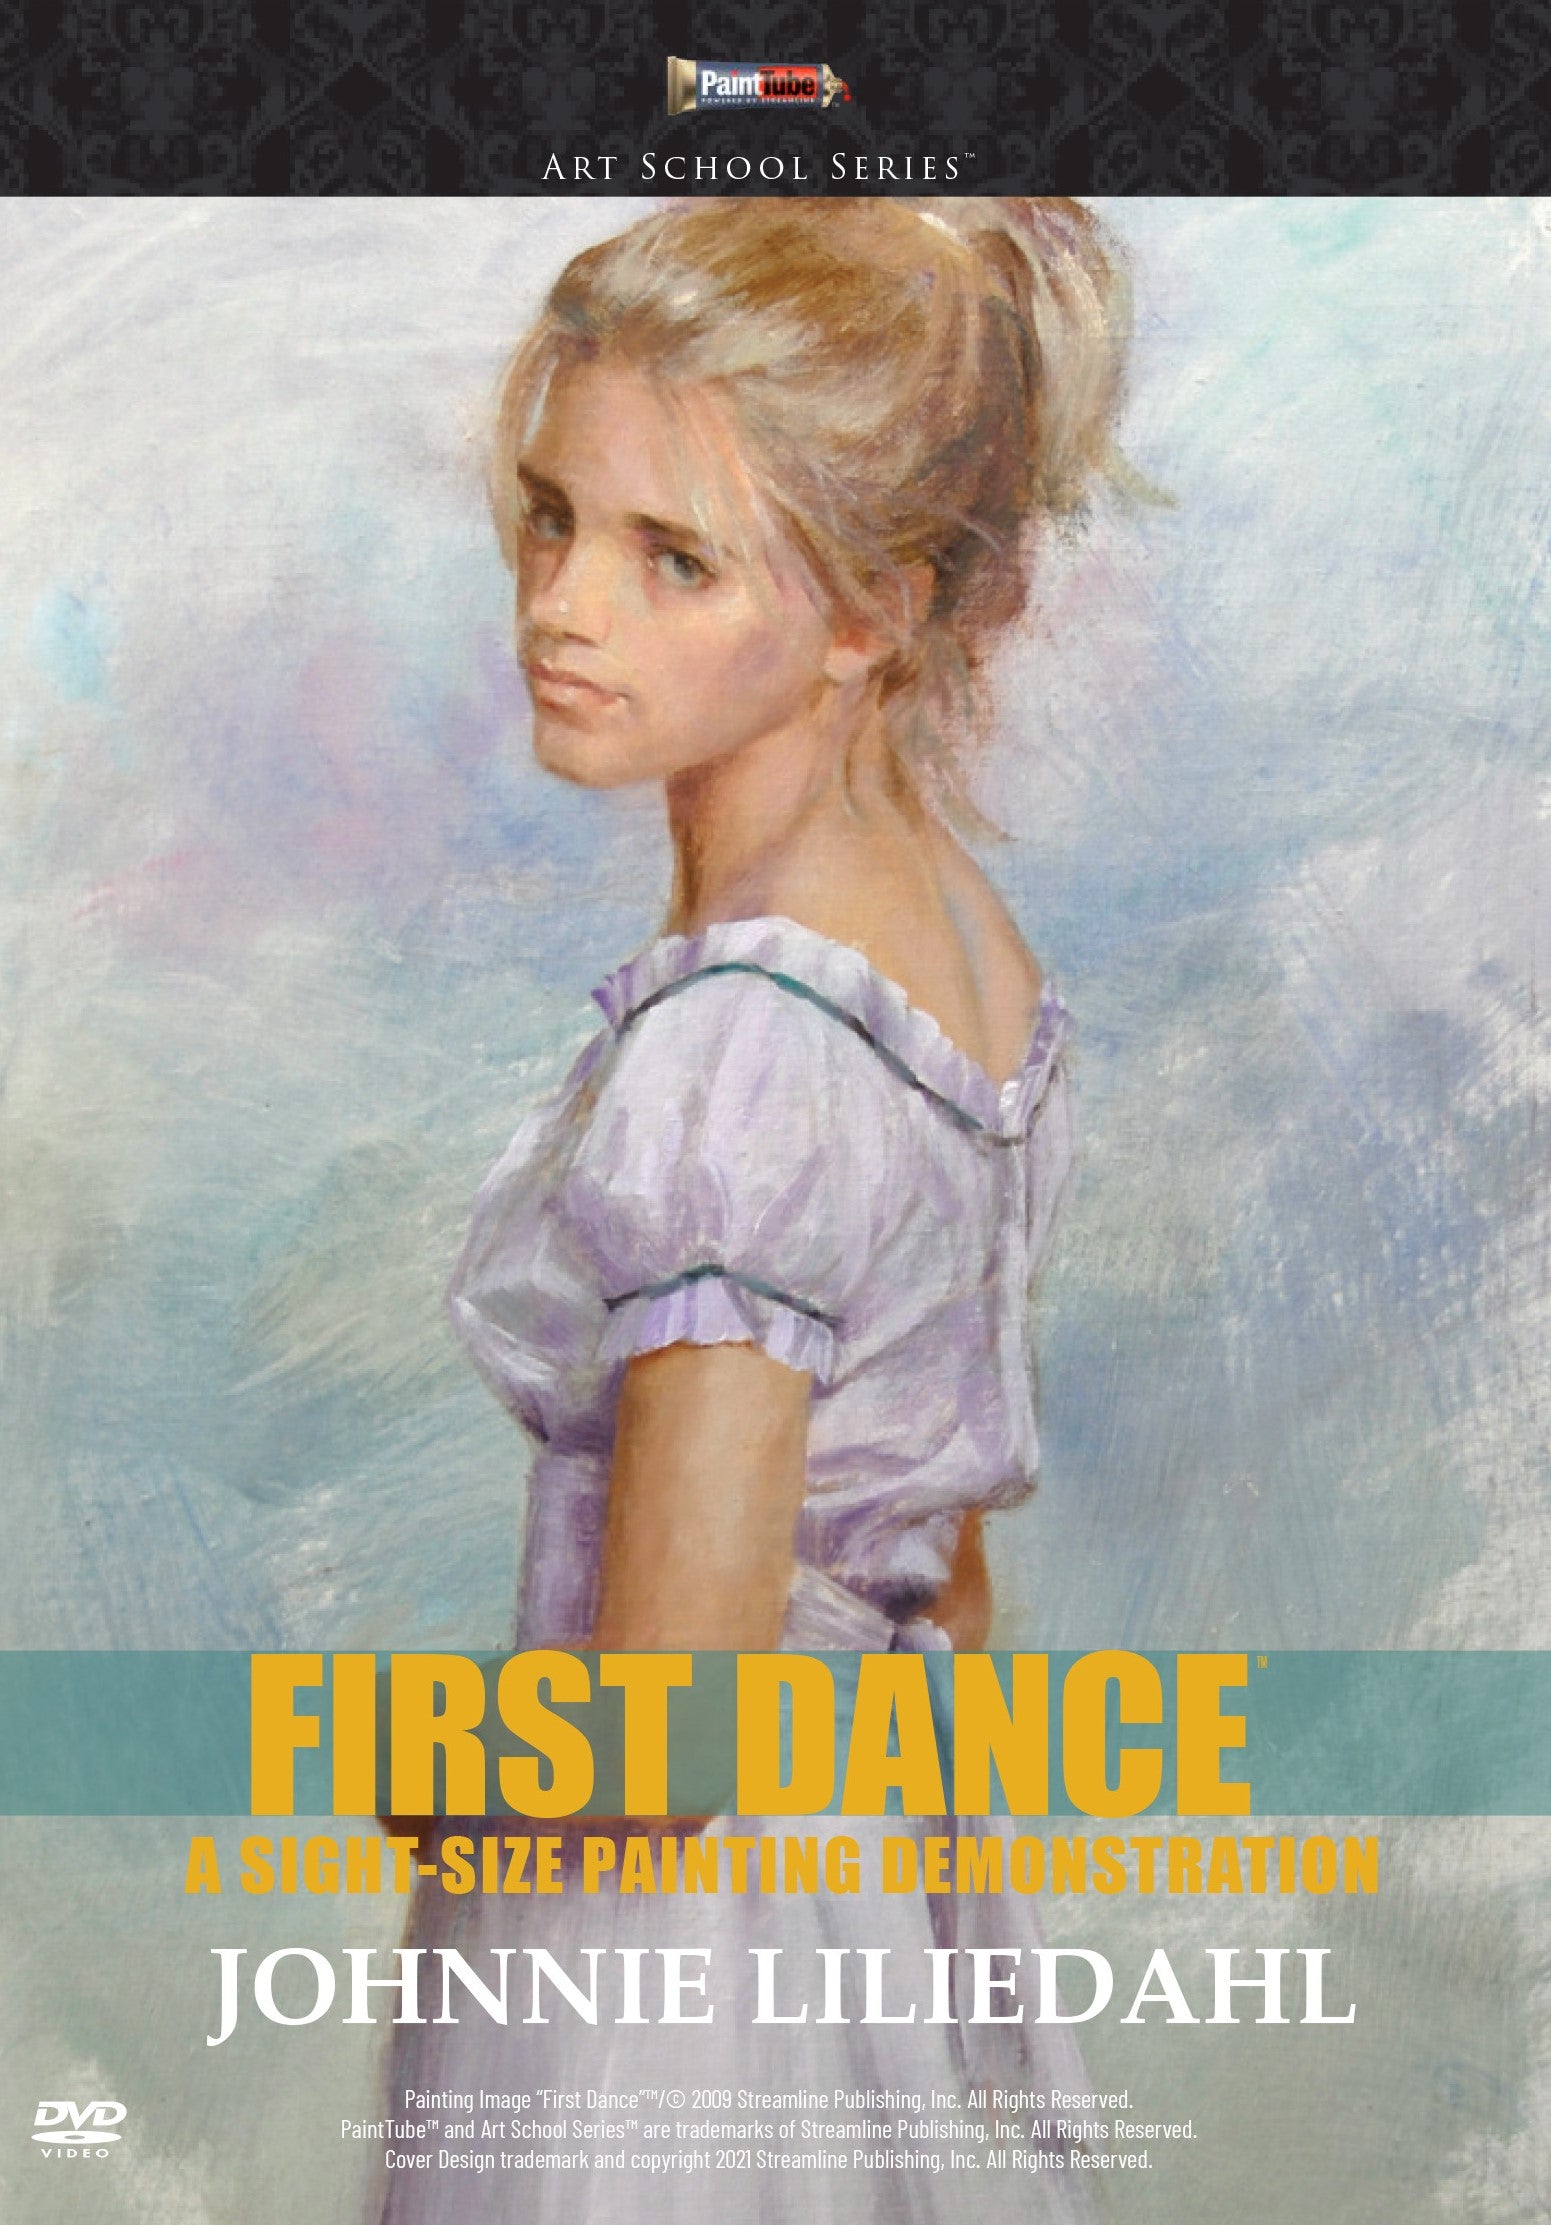 Johnnie Liliedahl: First Dance